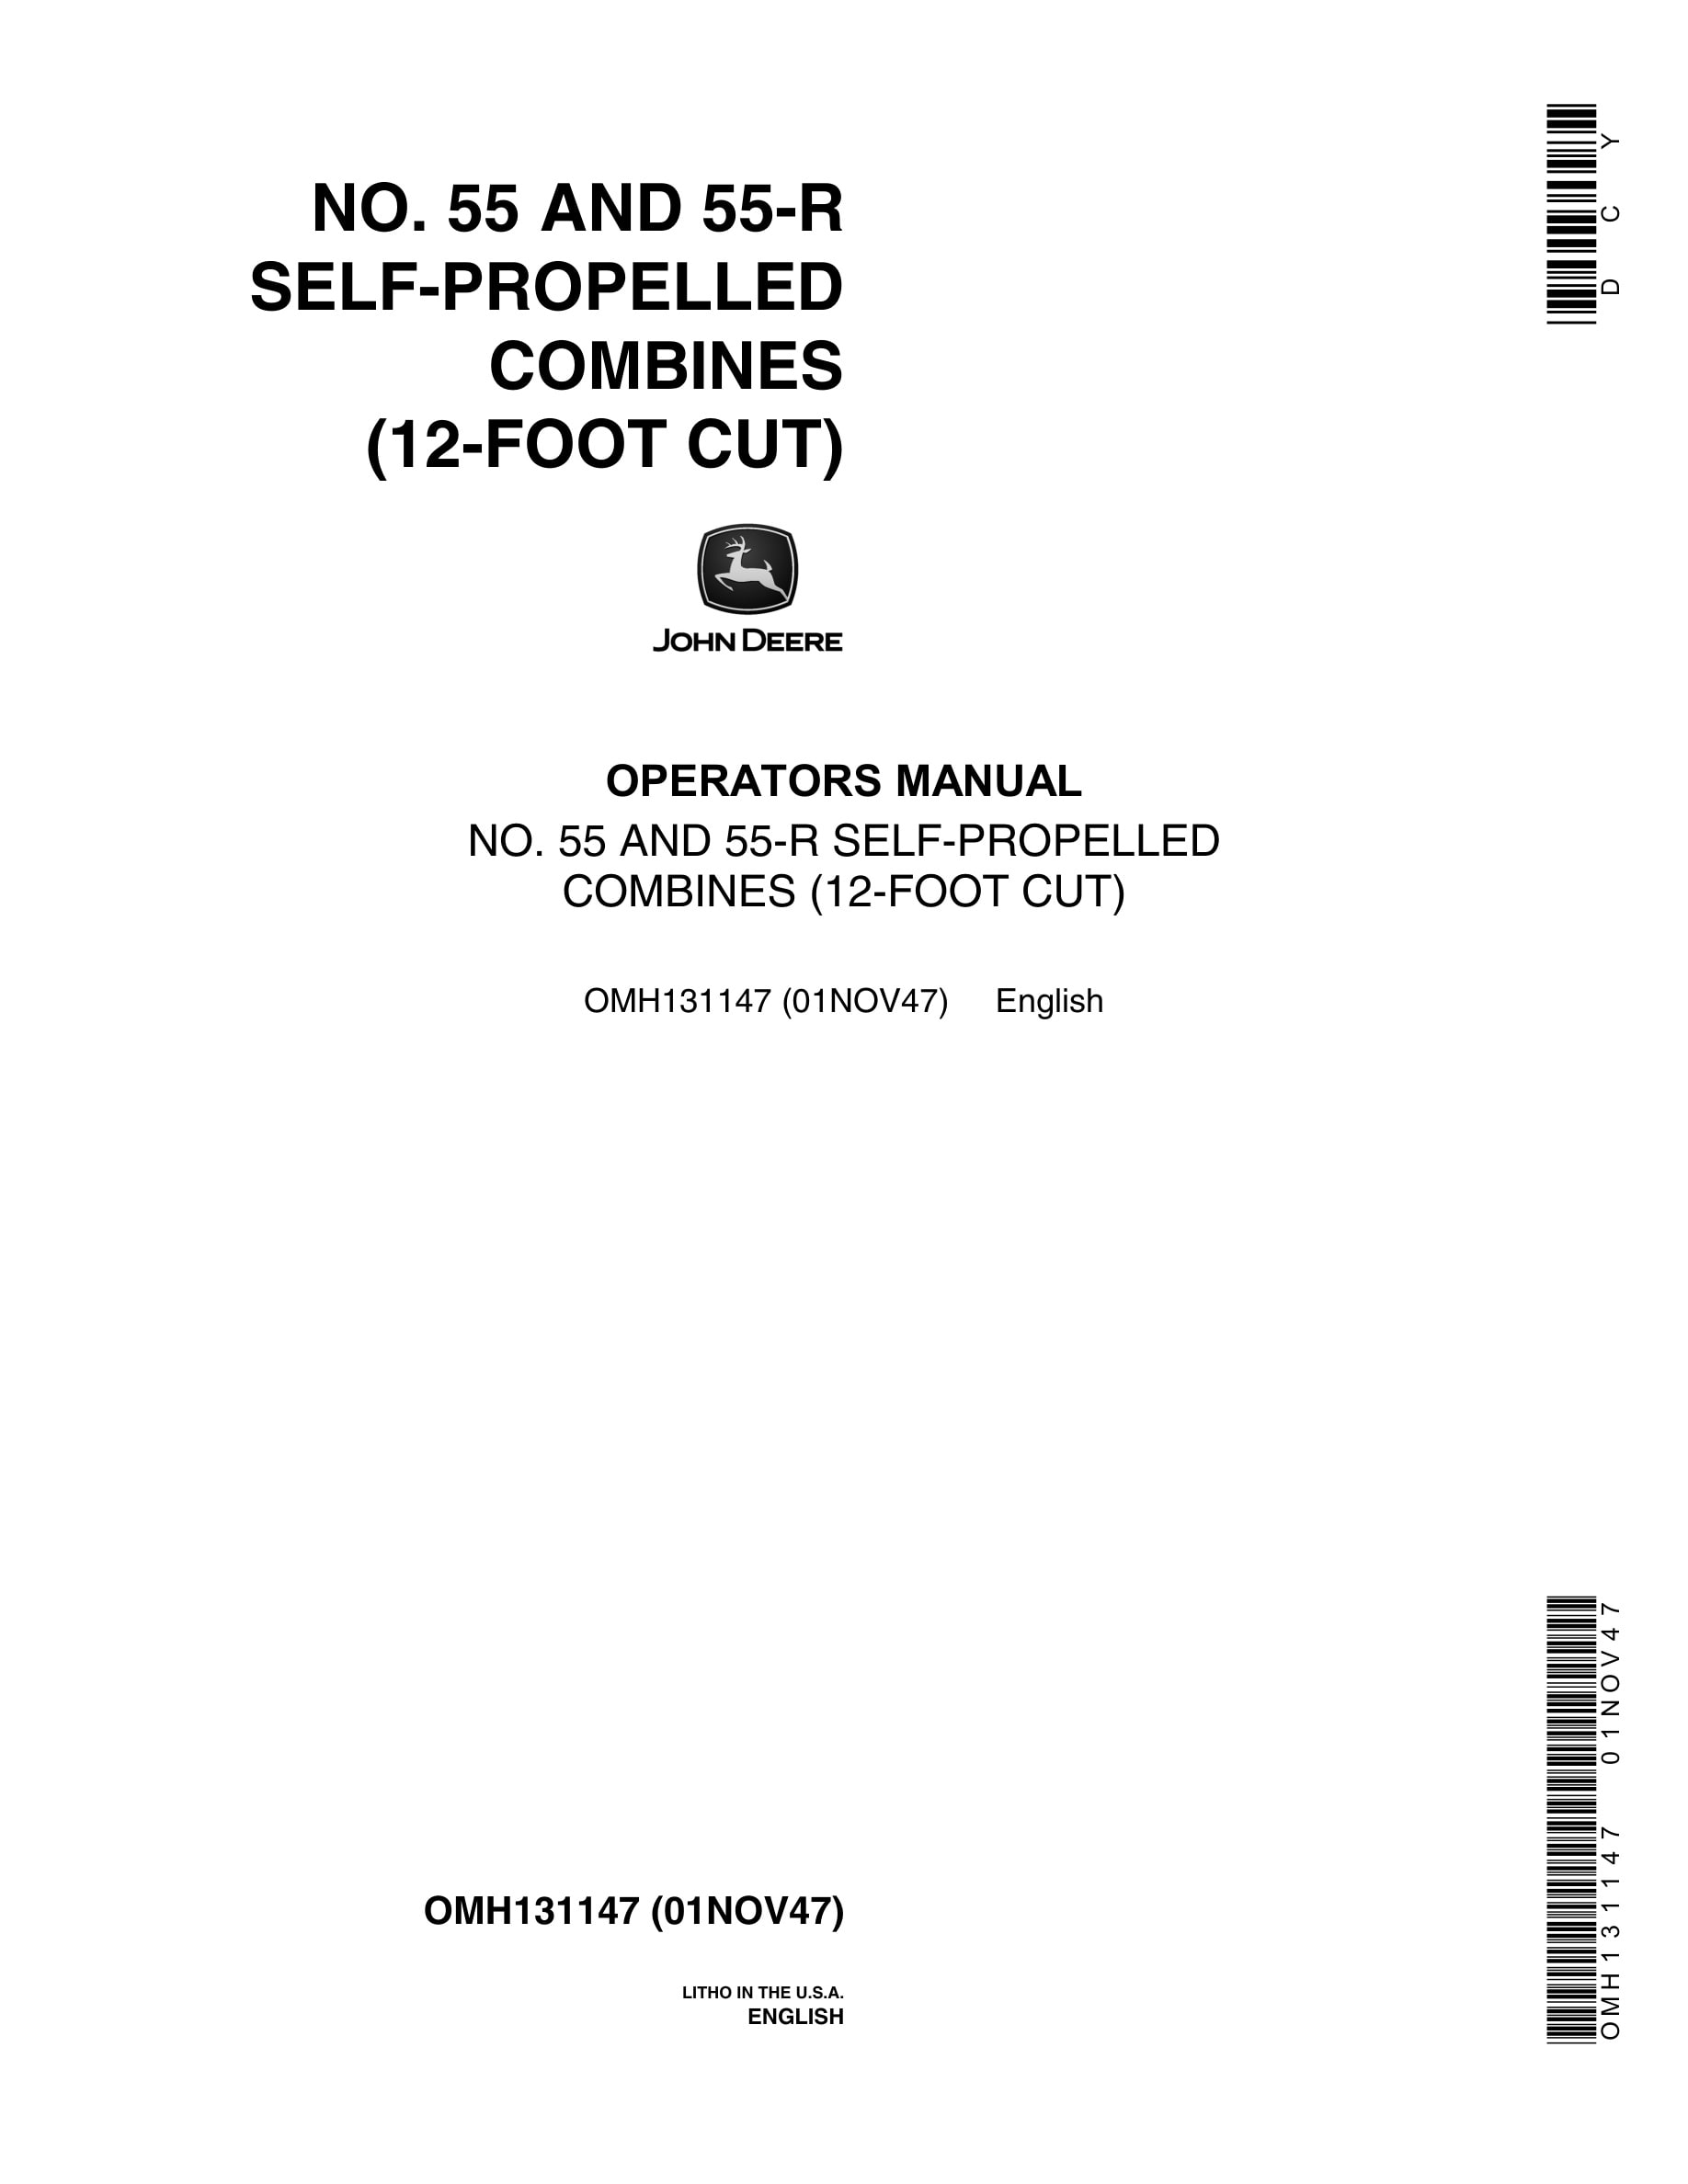 John Deere NO. 55 AND 55-R SELF-PROPELLED Combine Operator Manual OMH131147-1